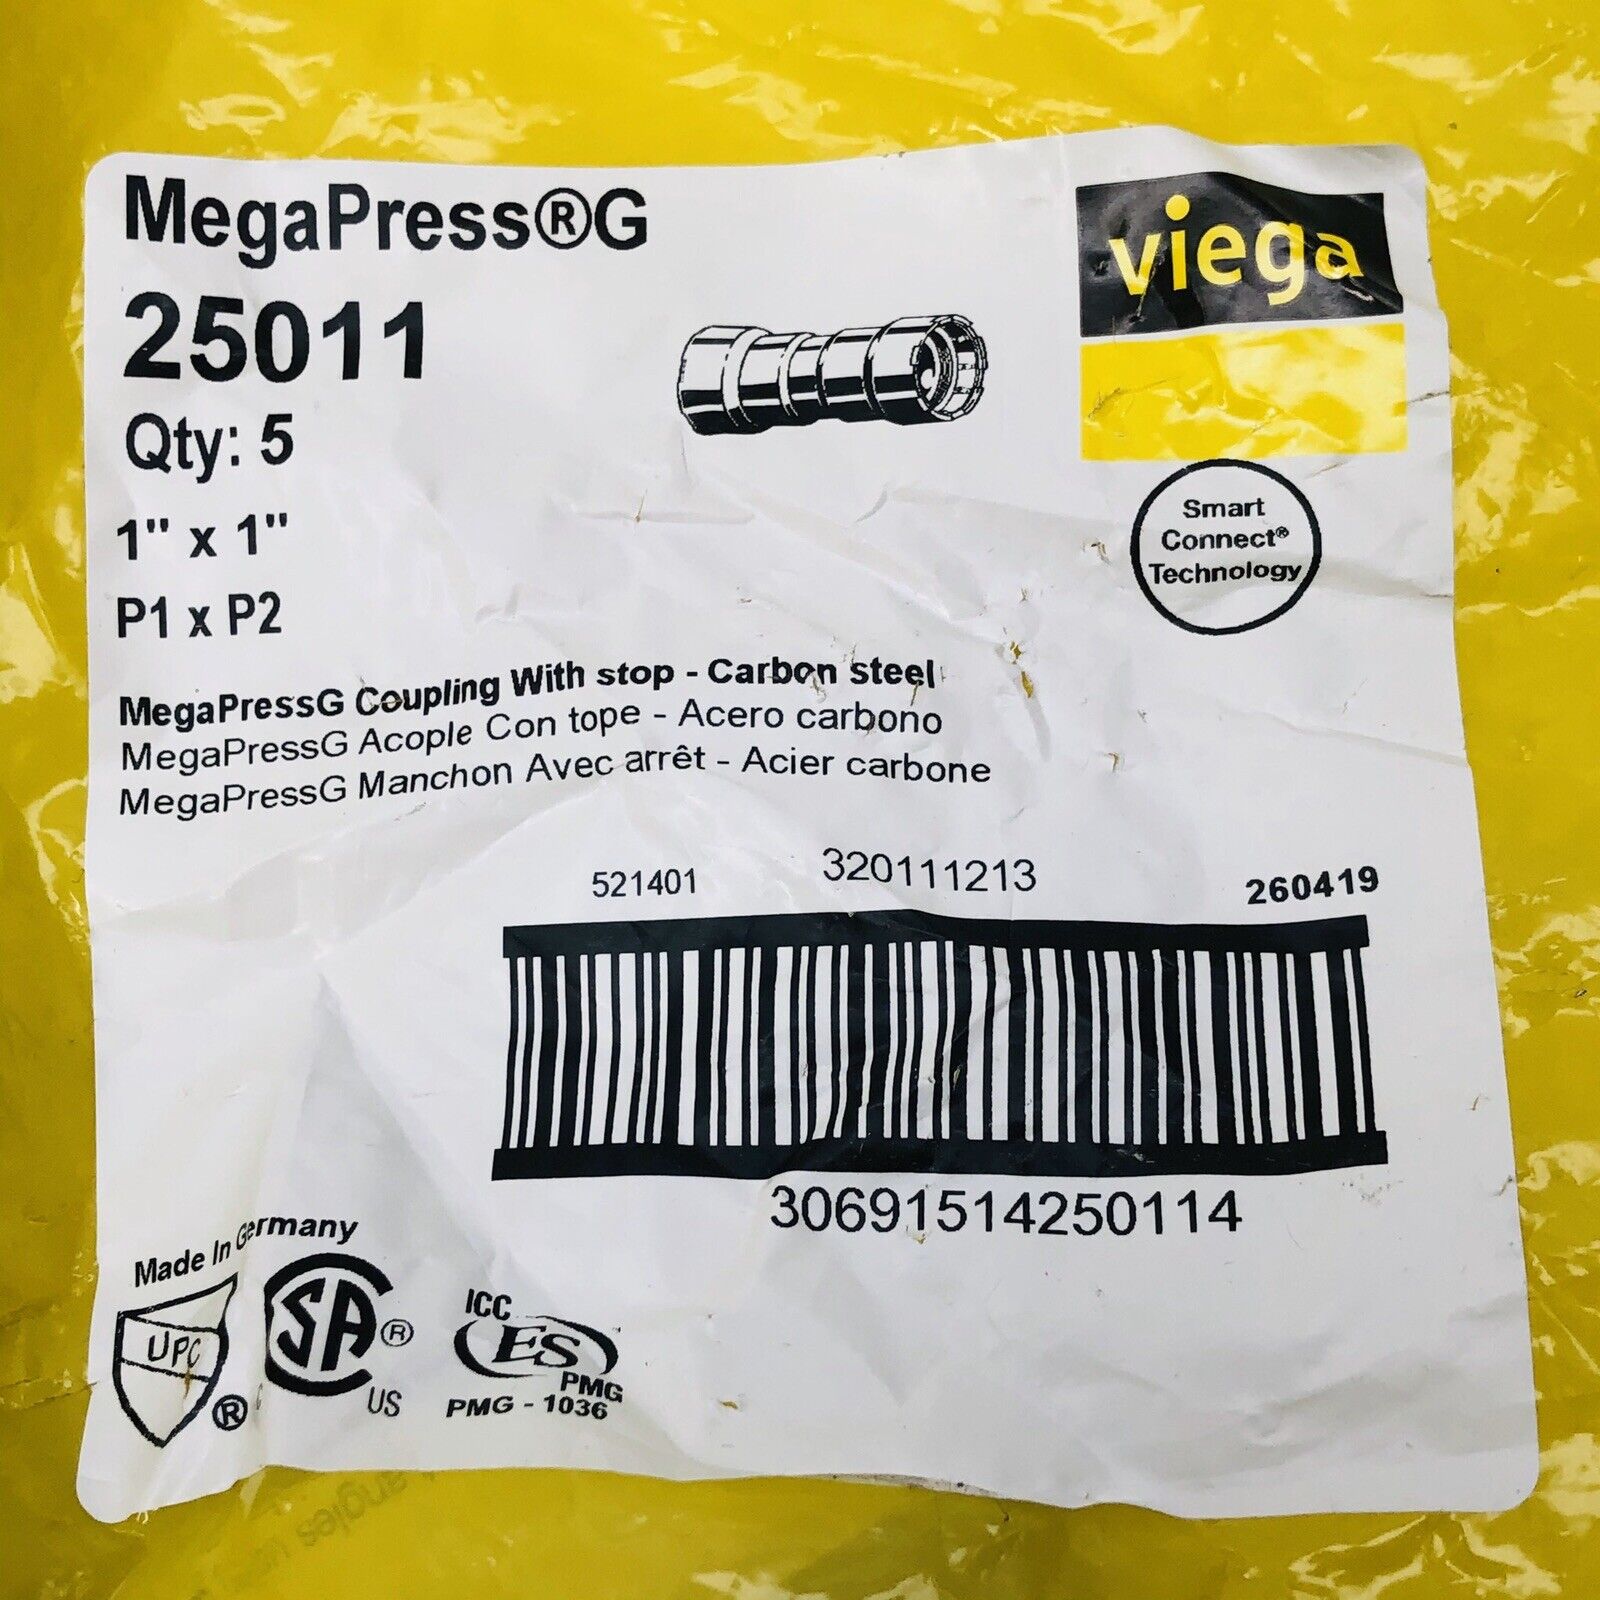 Viega MegaPressG Coupling With Stop Carbon Steel P1 1 P2 1